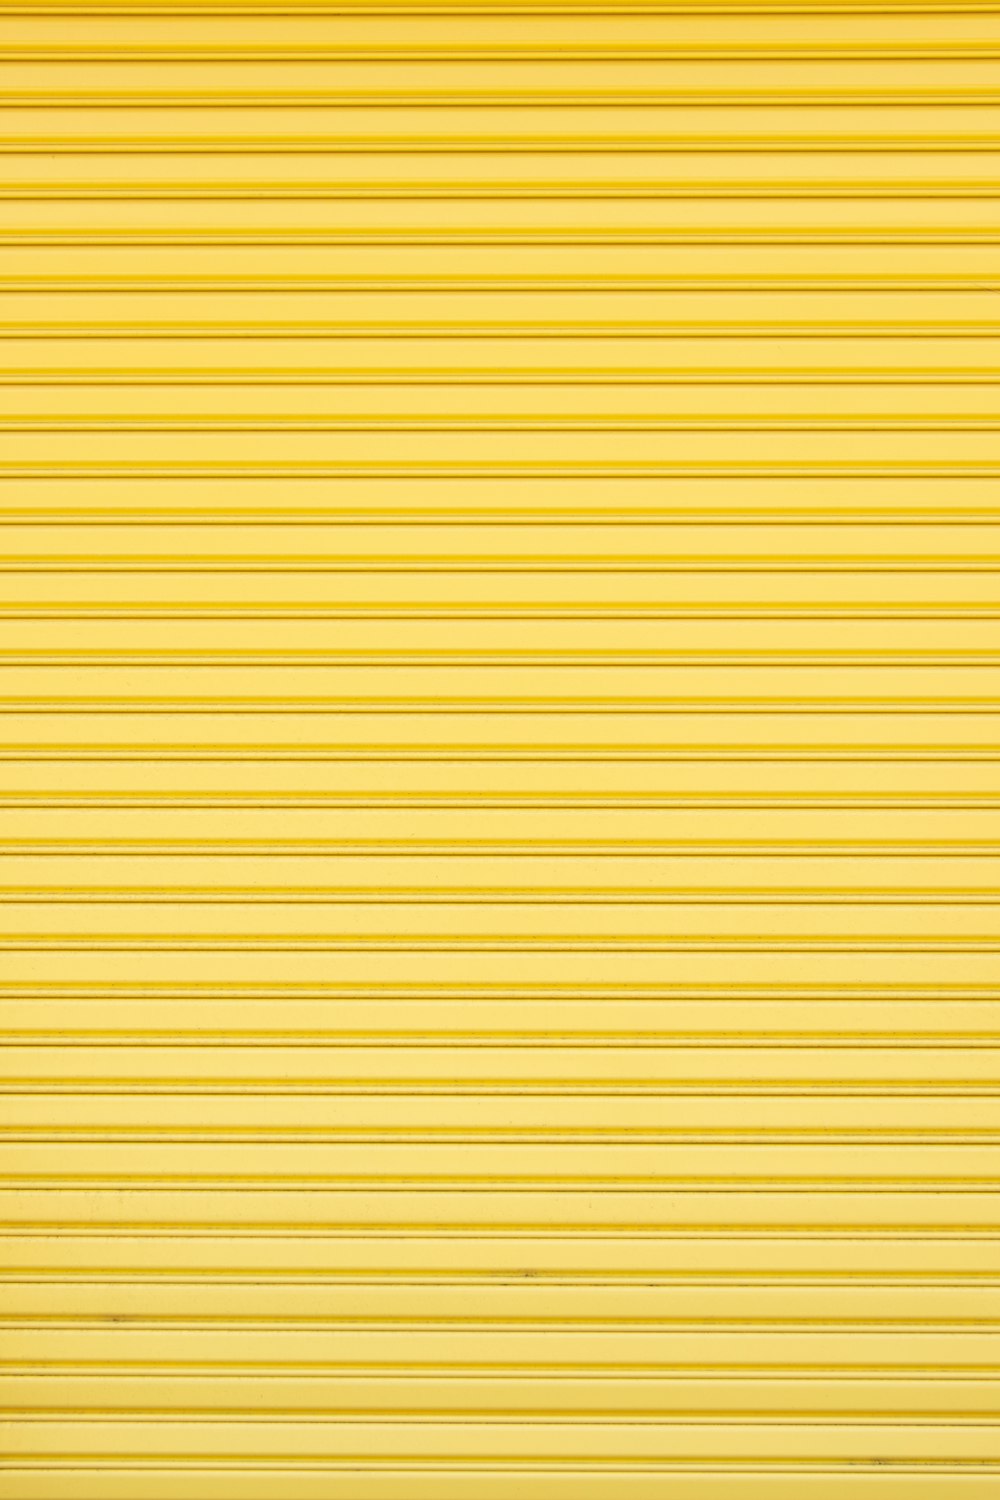 a yellow garage door that is closed